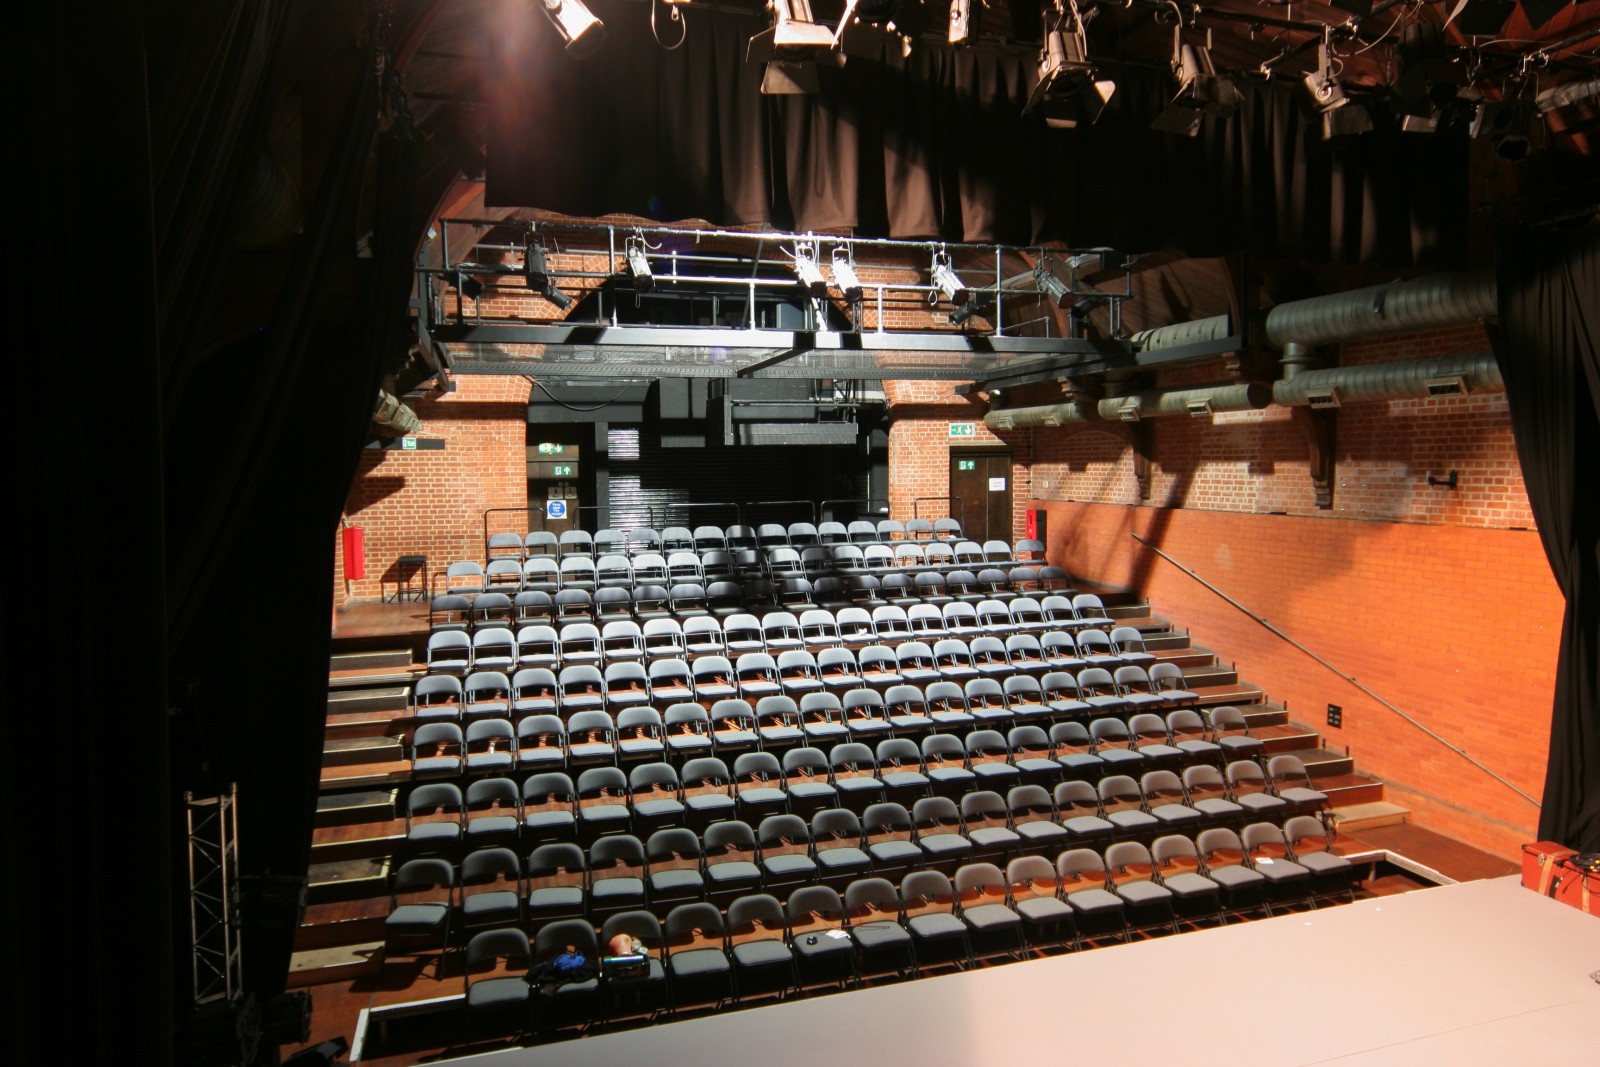 JL-theatre-seating-1600x1067.jpg